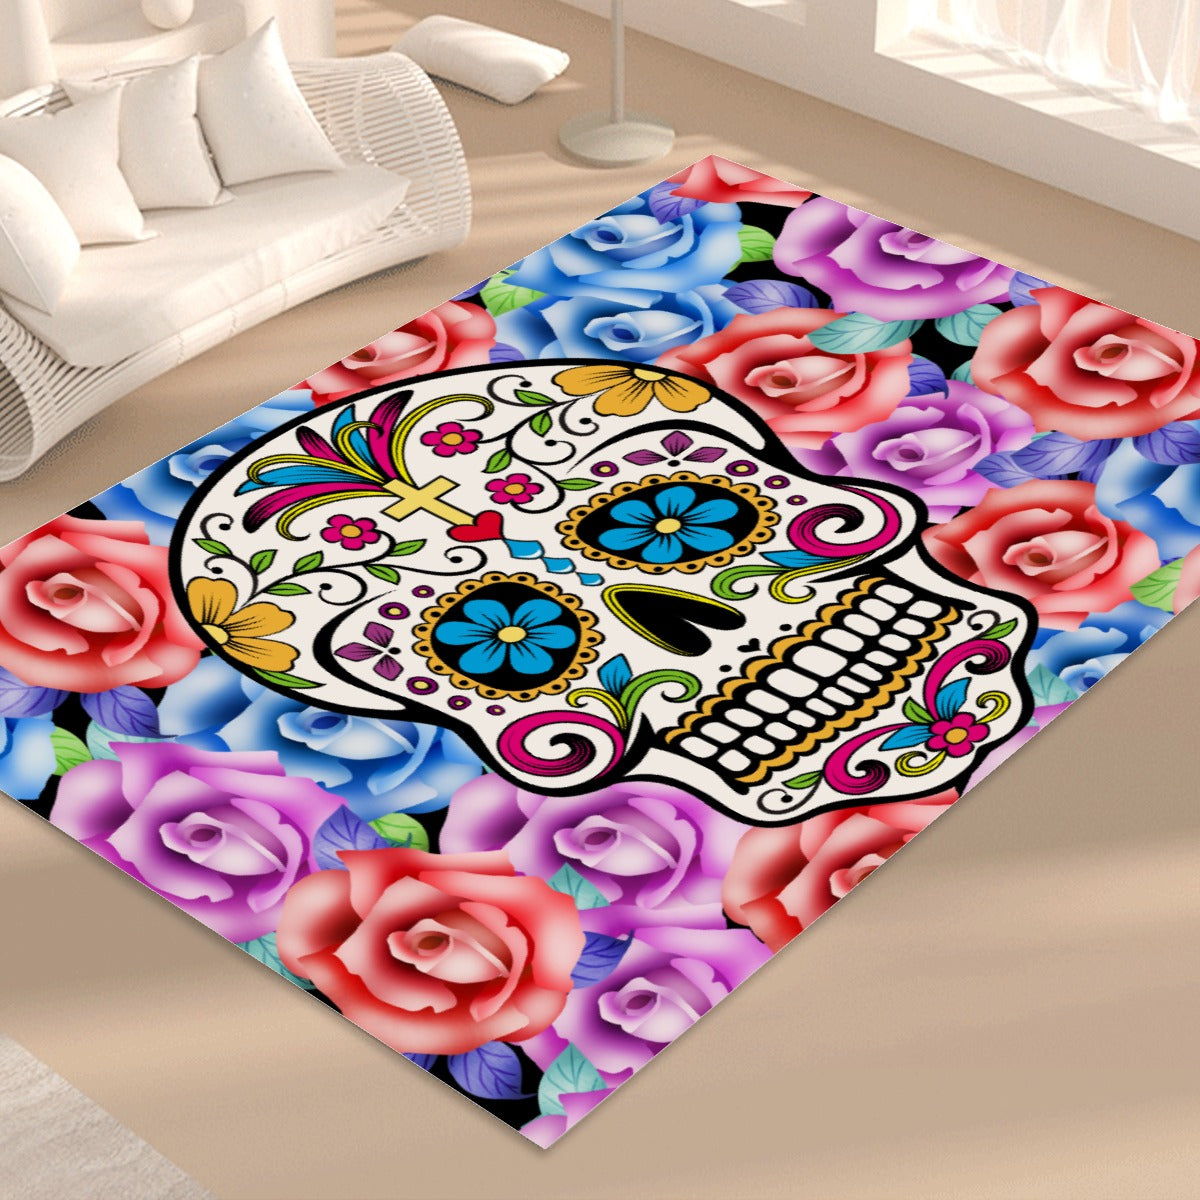 Sugar skull day of the dead Rectangular Floor Mat, Dia de los muertos skeleton carpet rug mat